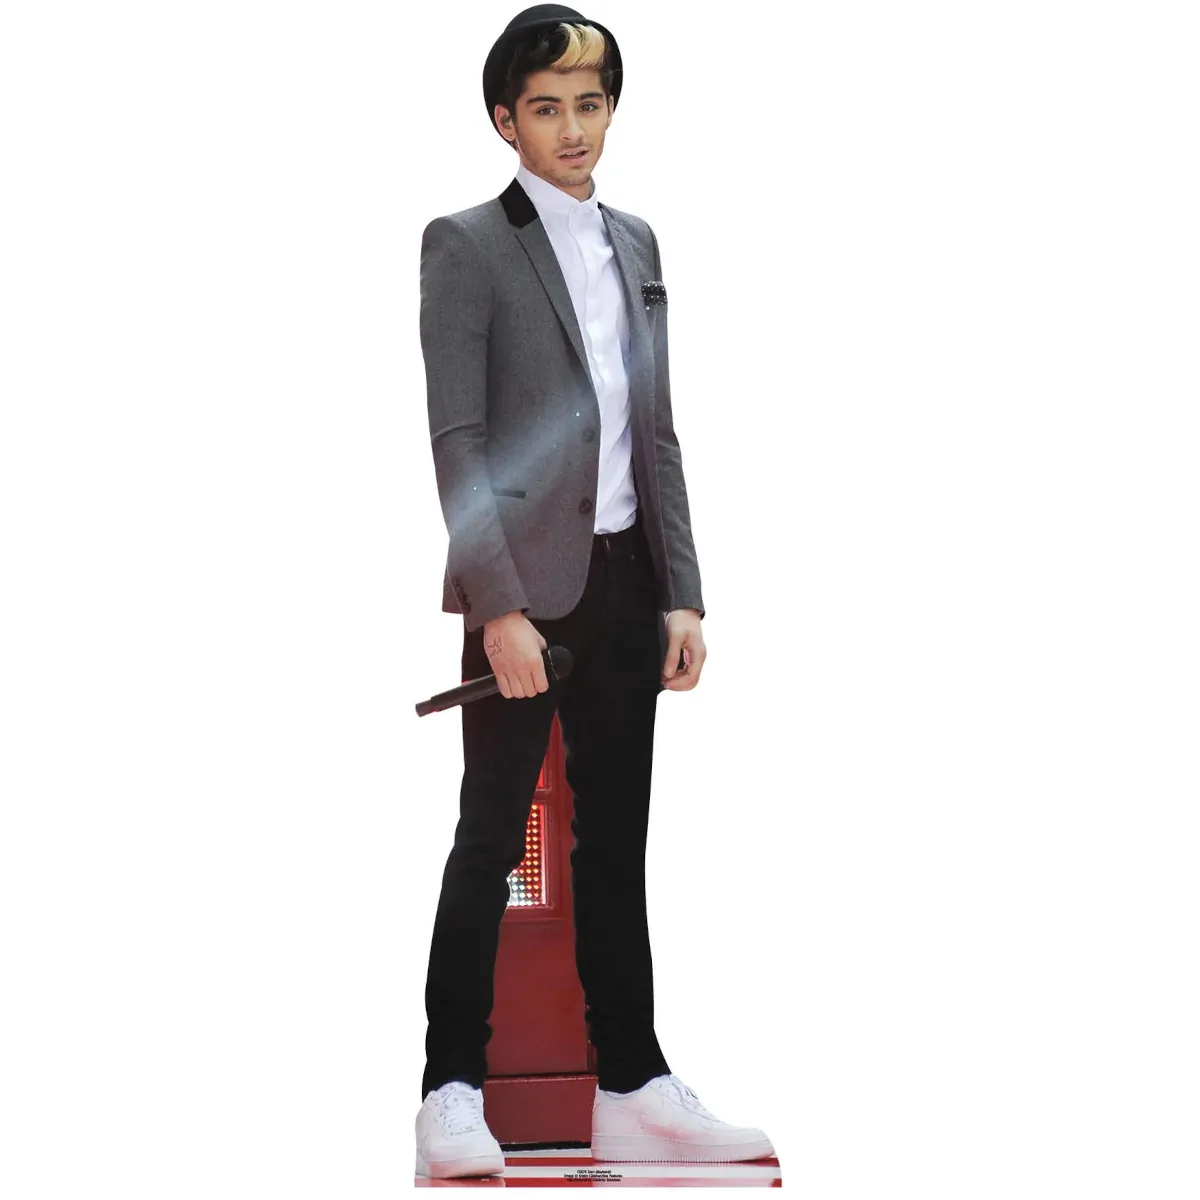 CS575 Zayn Malik 'One Direction' (British Singer) Lifesize Cardboard Cutout Standee Front